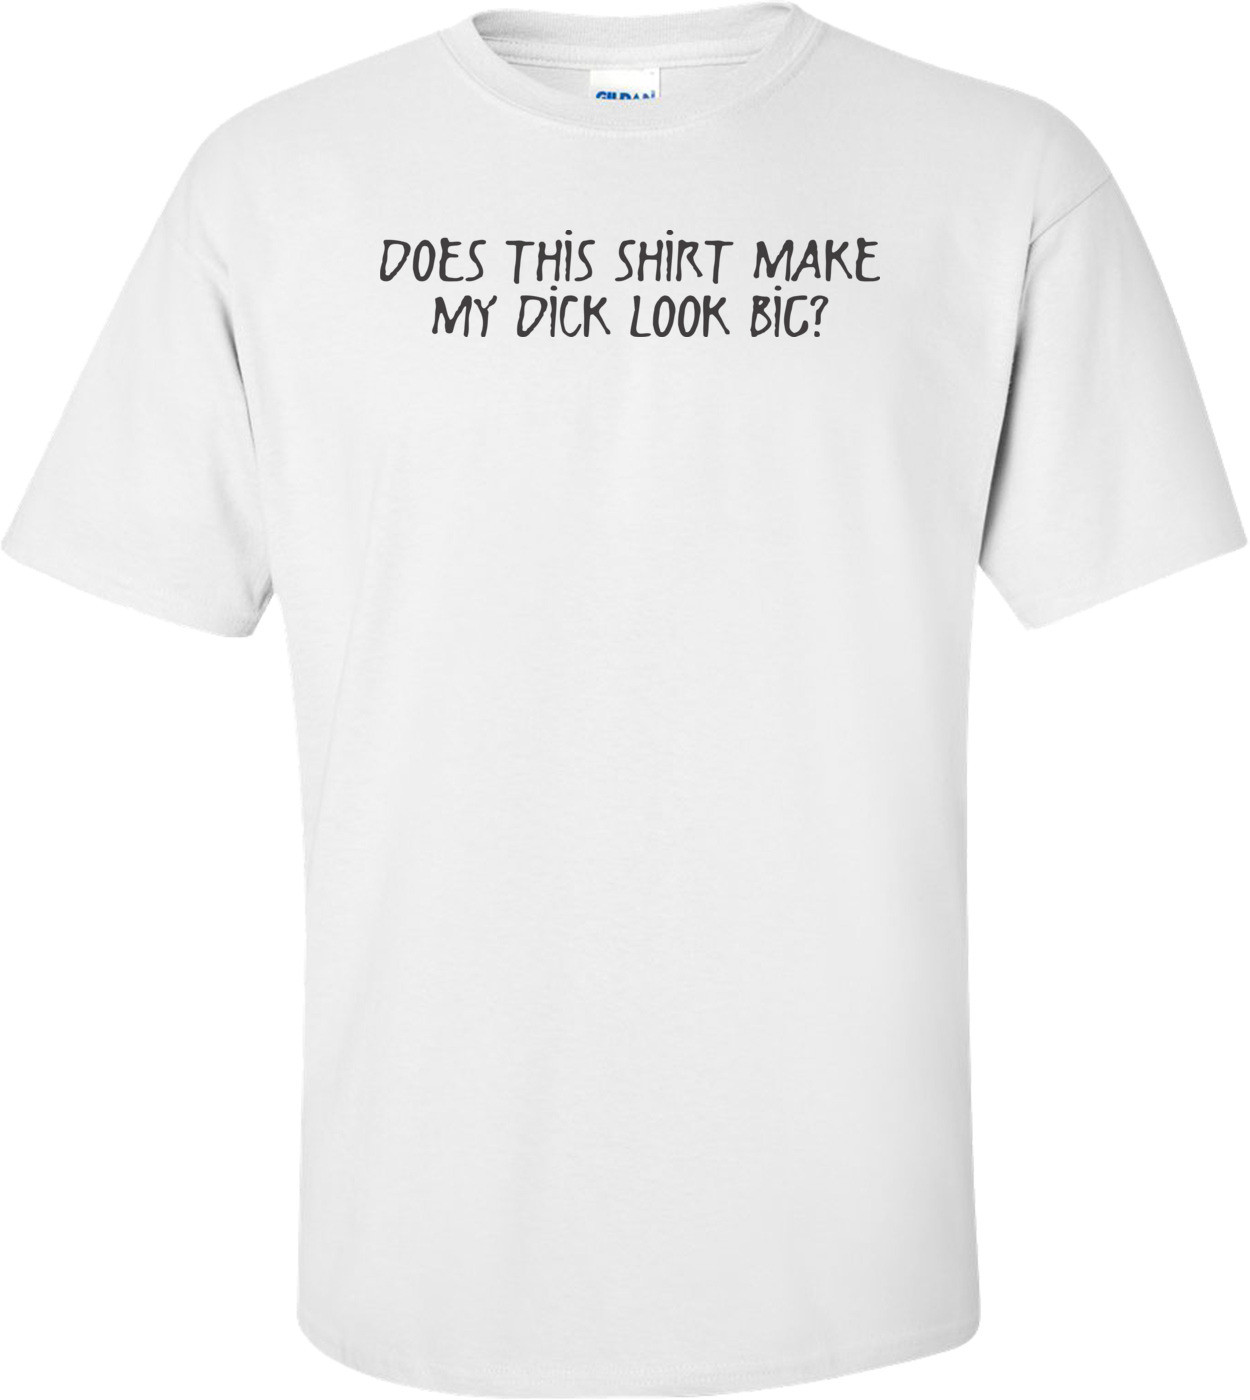 Does This Shirt Make My Dick Look Big? T-shirt